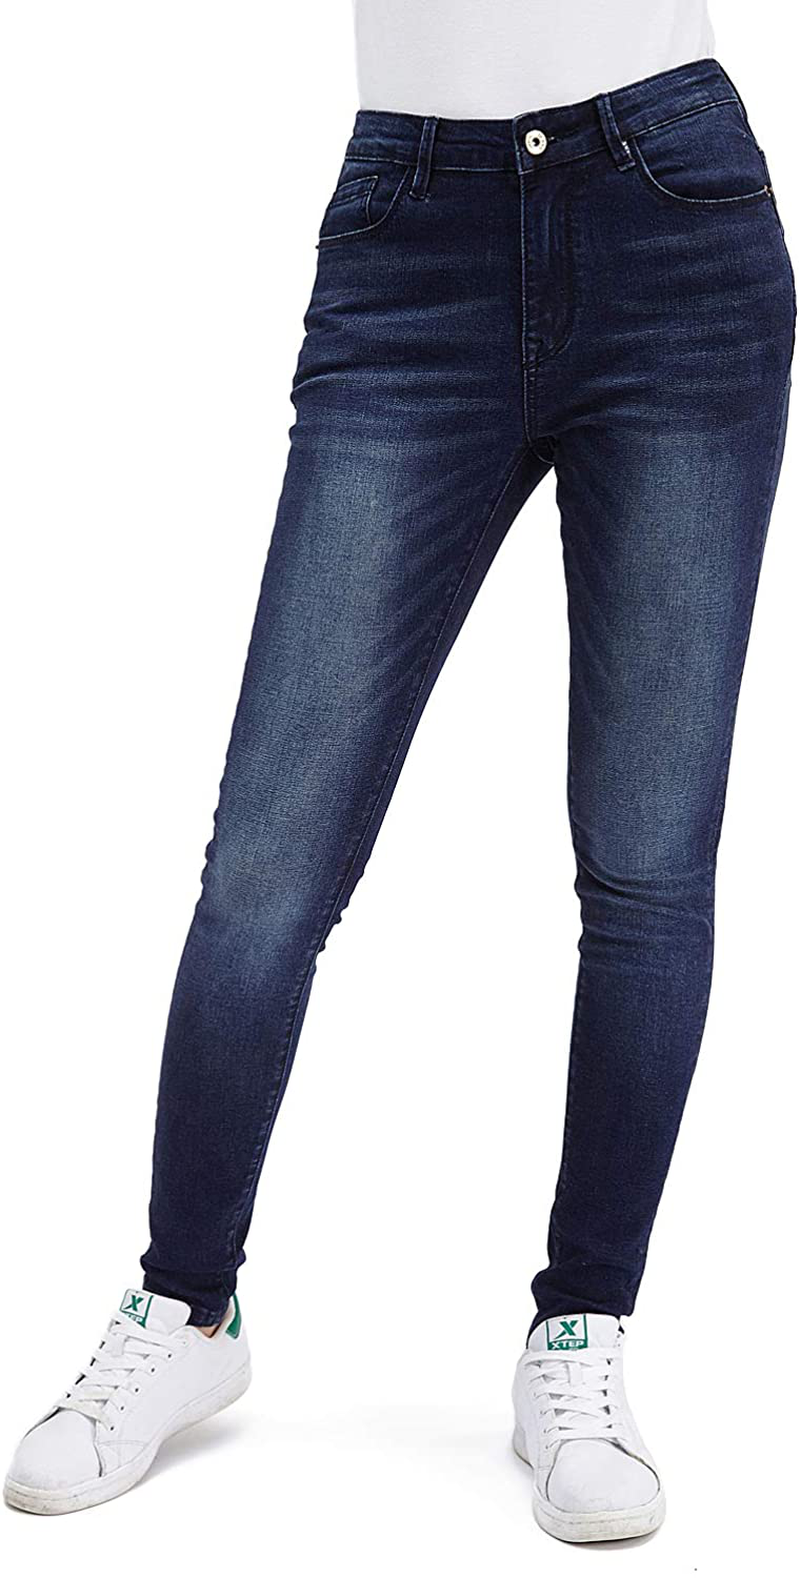 CJH DREAM Women's Juniors Jeans & Cotton Stretch Super Soft Skinny Jeans for Women Mid-Waist